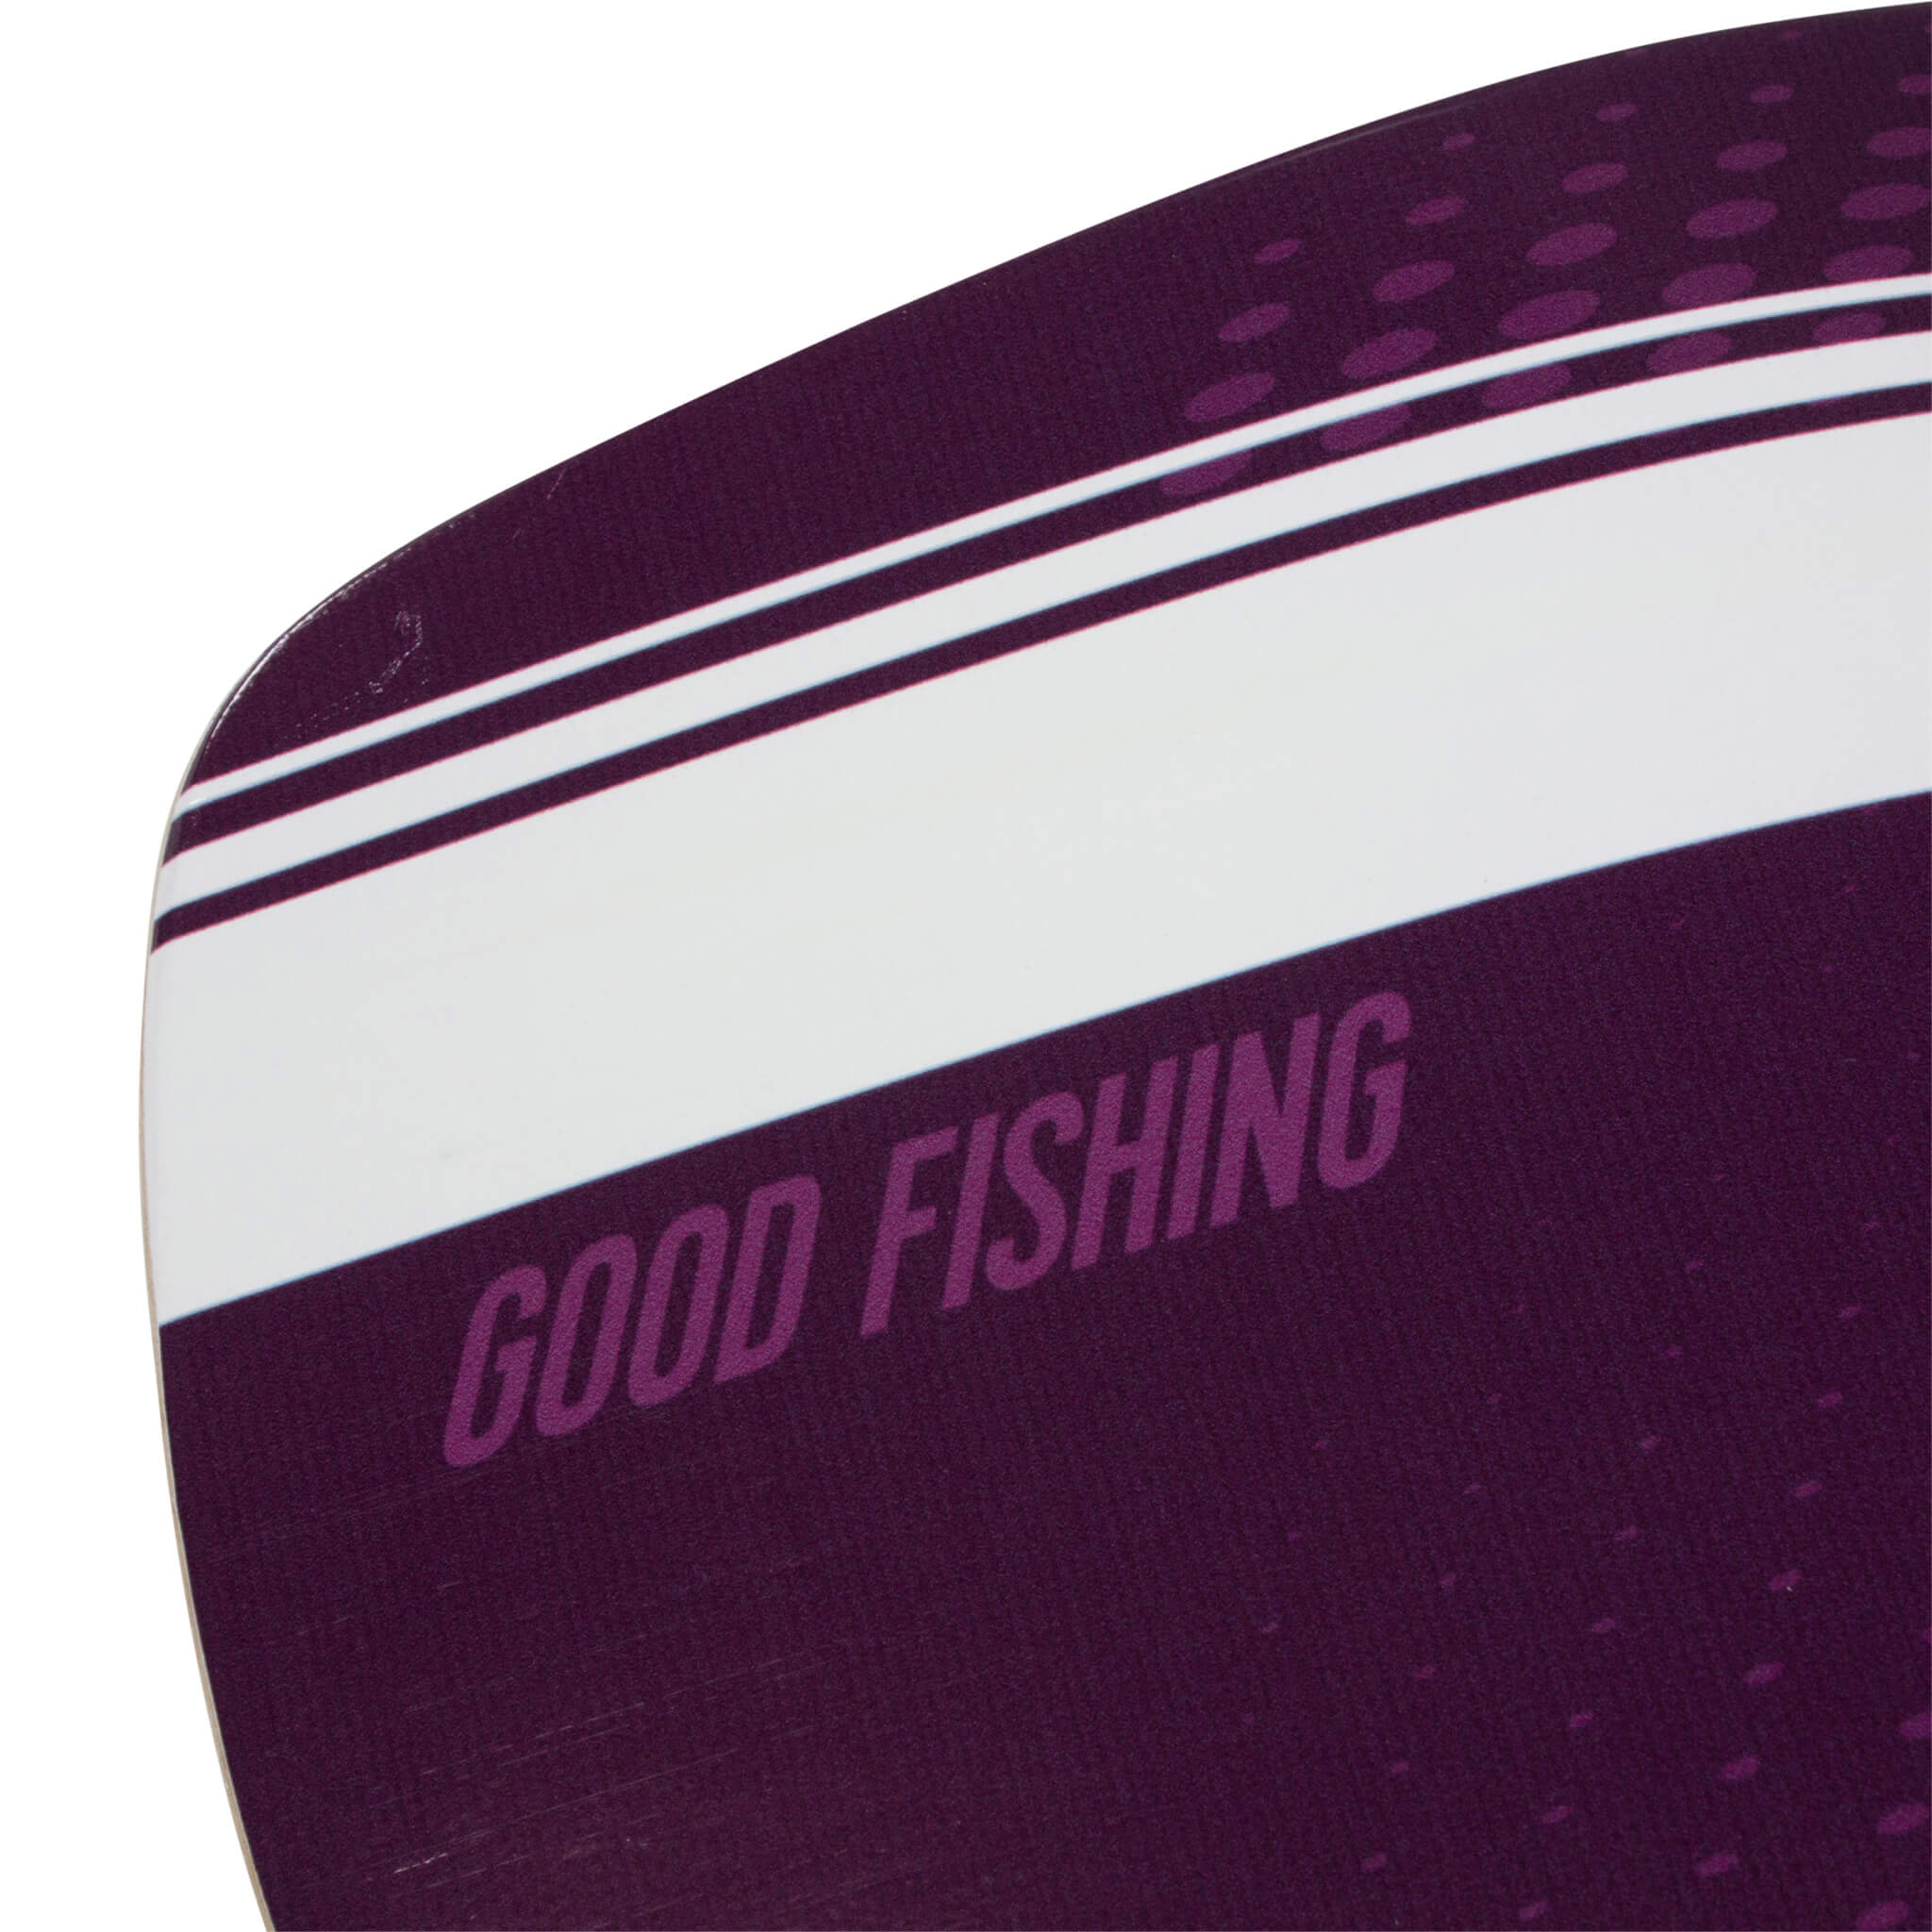 Good_Fishing_TGSR_Top_Gear_Steady_Rollin_Skate_Deck_5.jpg